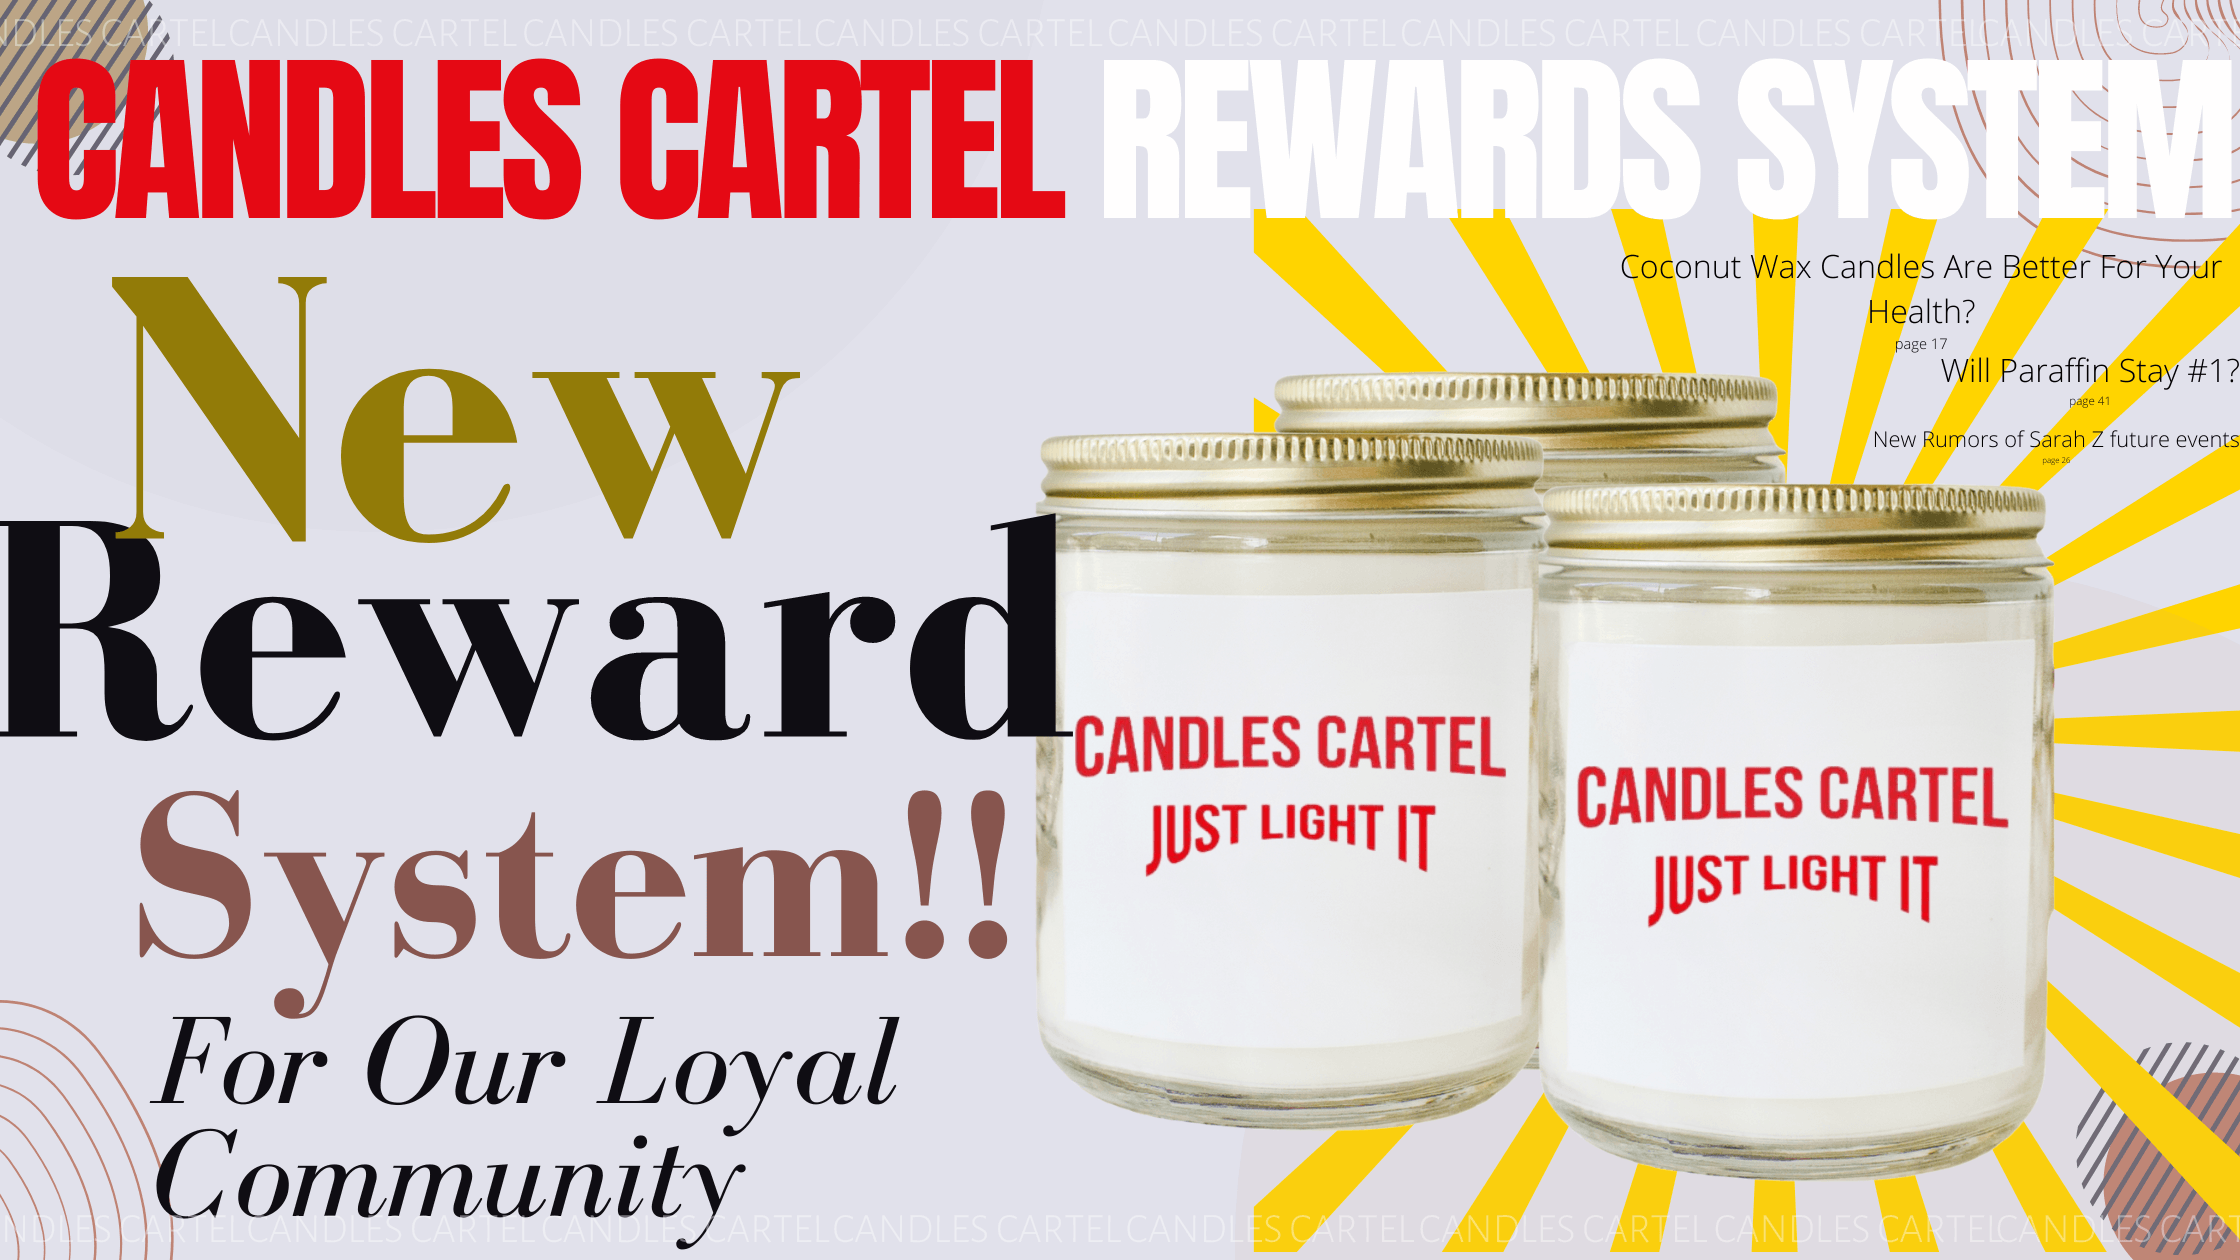 Candles Cartel Reward System  - Blog Article